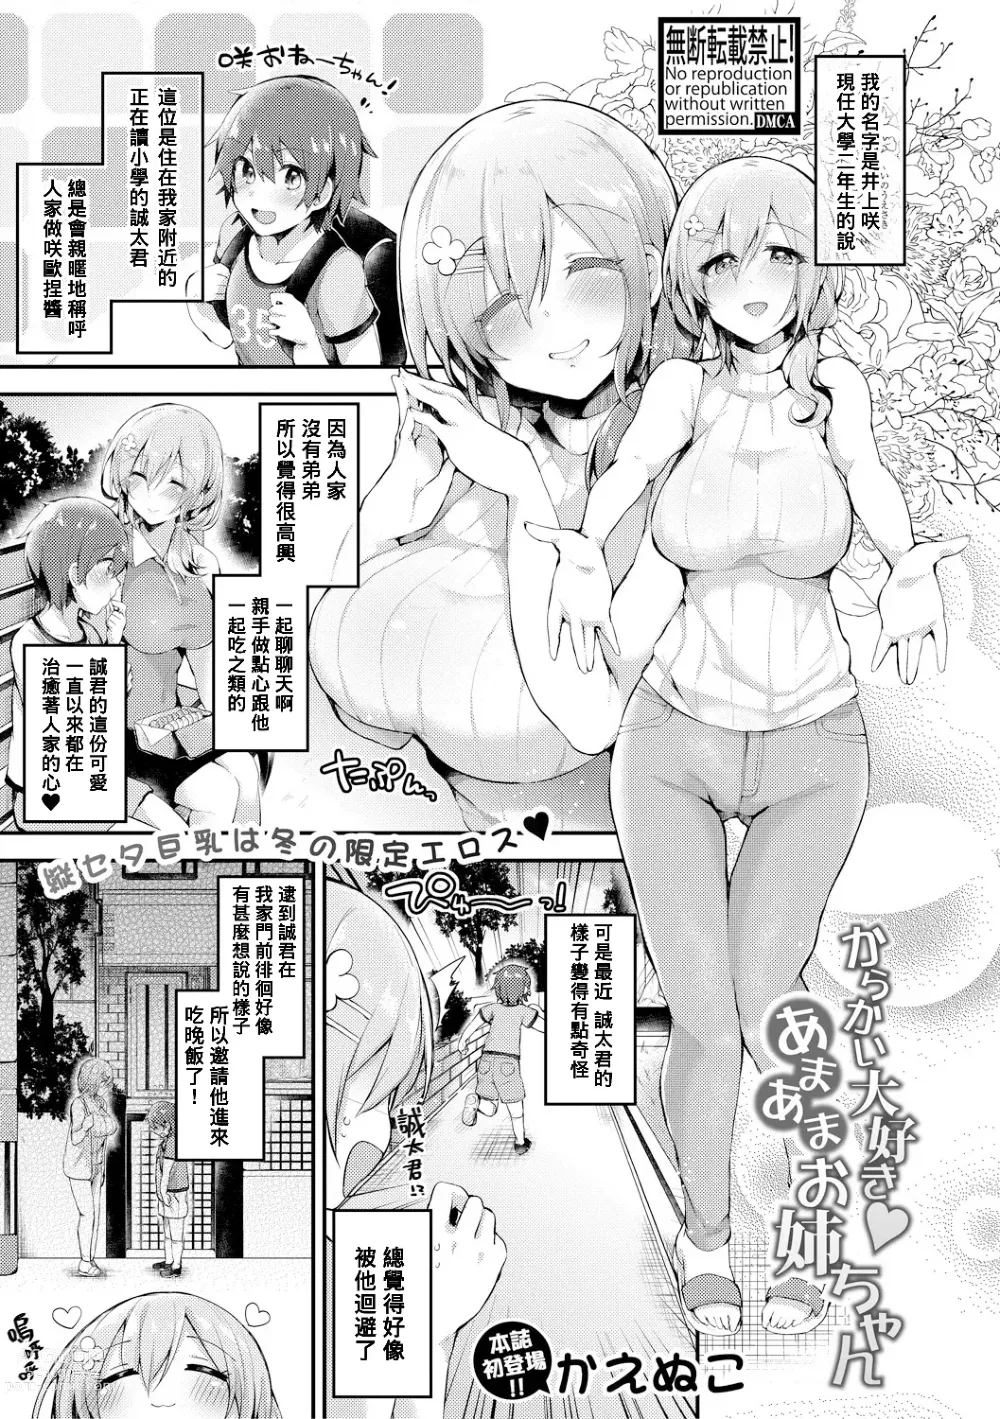 Page 1 of manga Karakai Daisuki ♥ Ama Ama Onee-chan